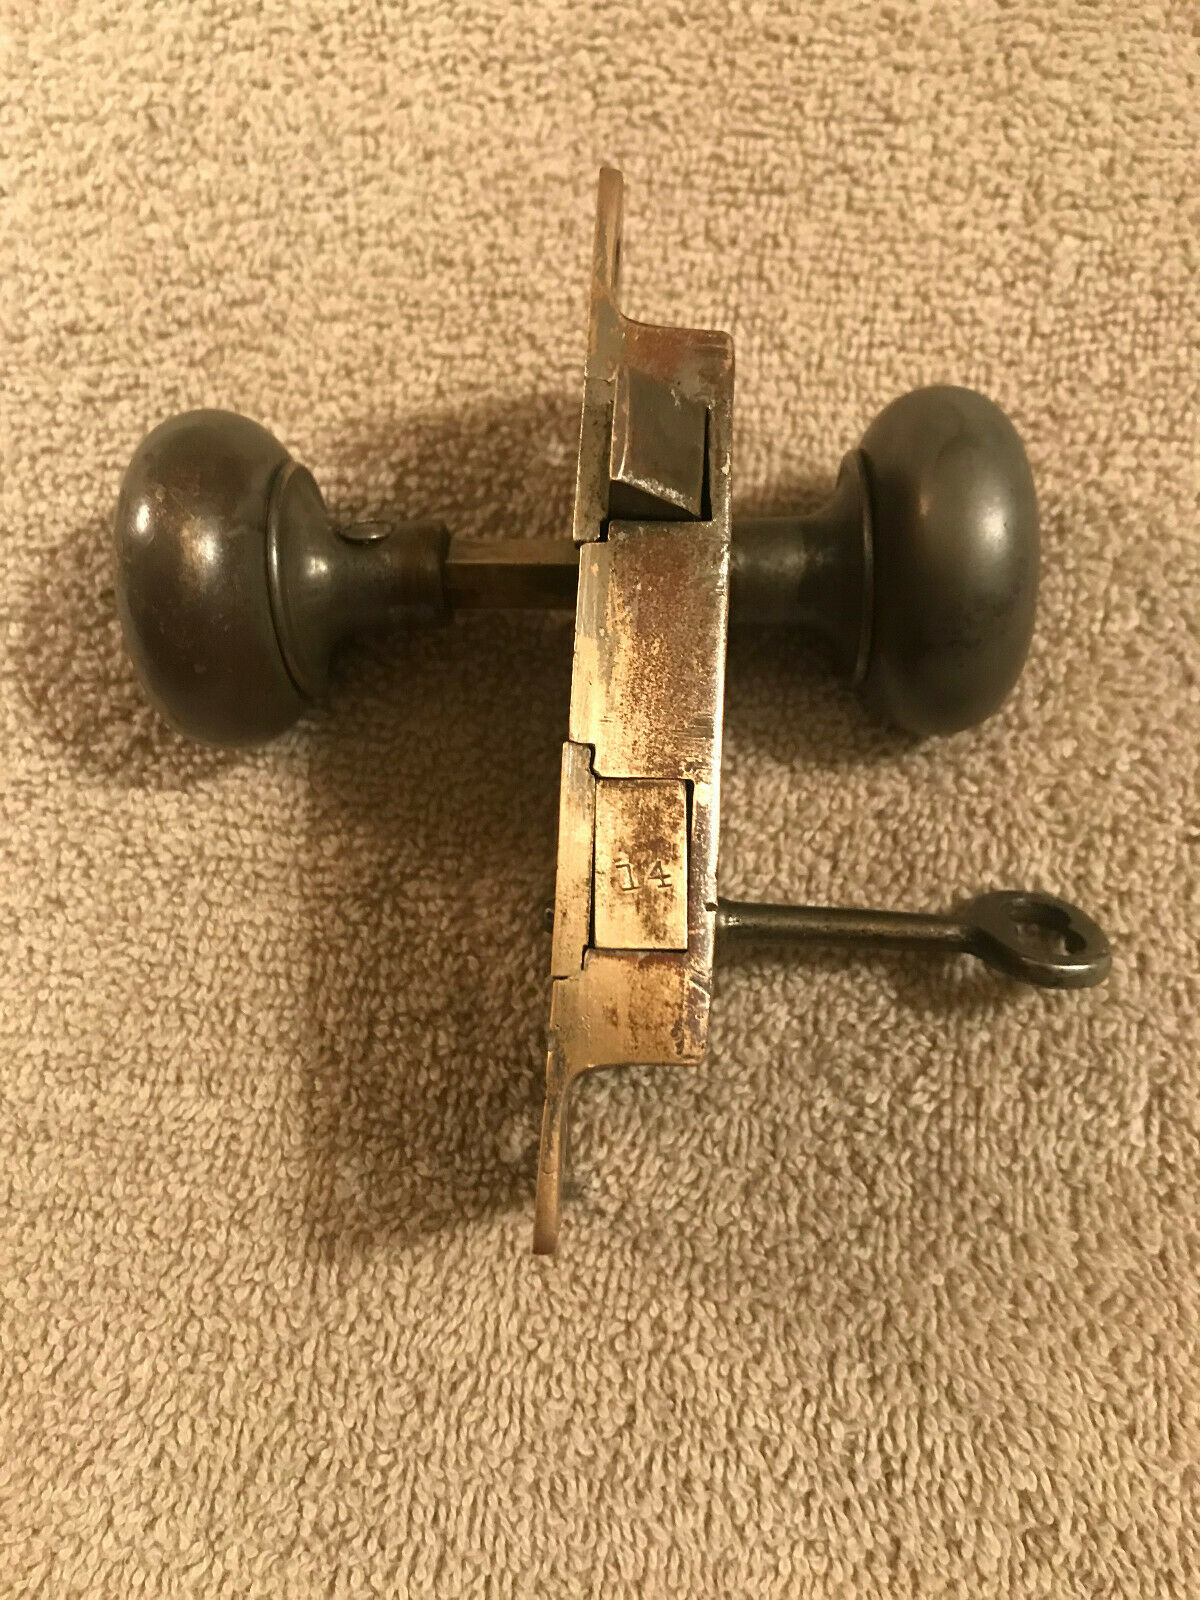 Old Working Brass Rim Lock By Russwin, Rim Lock, Knobs & Key, Free S/h